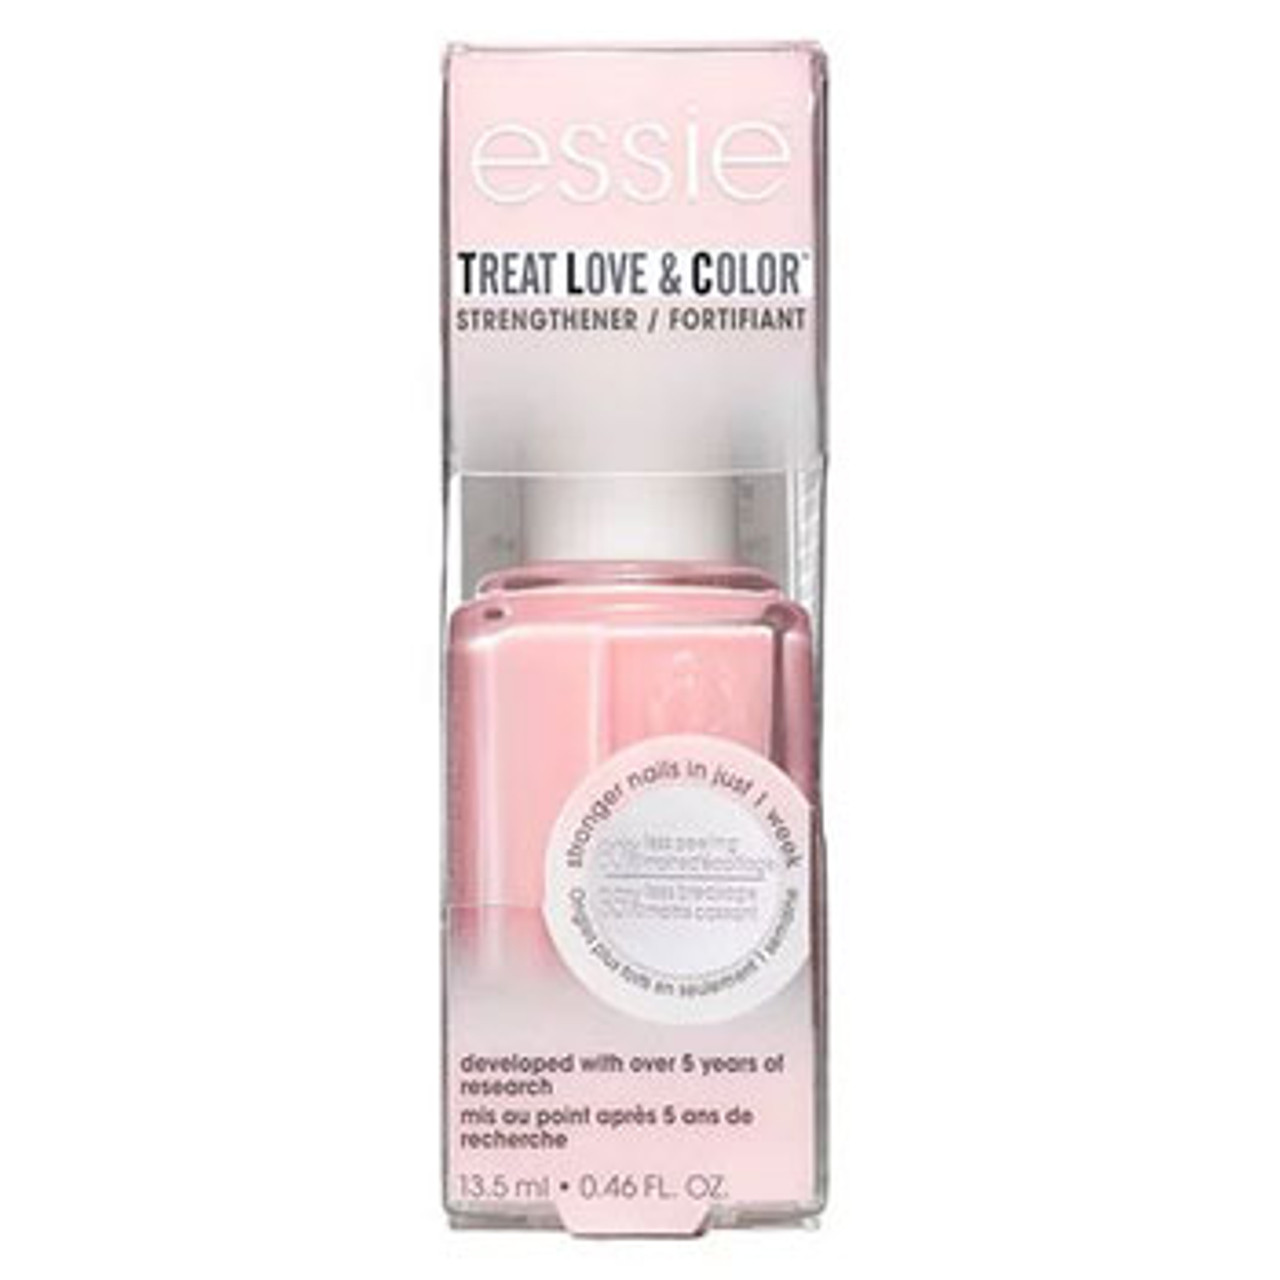 Essie Treat Love & Color Minimally Modest - 0.46 oz